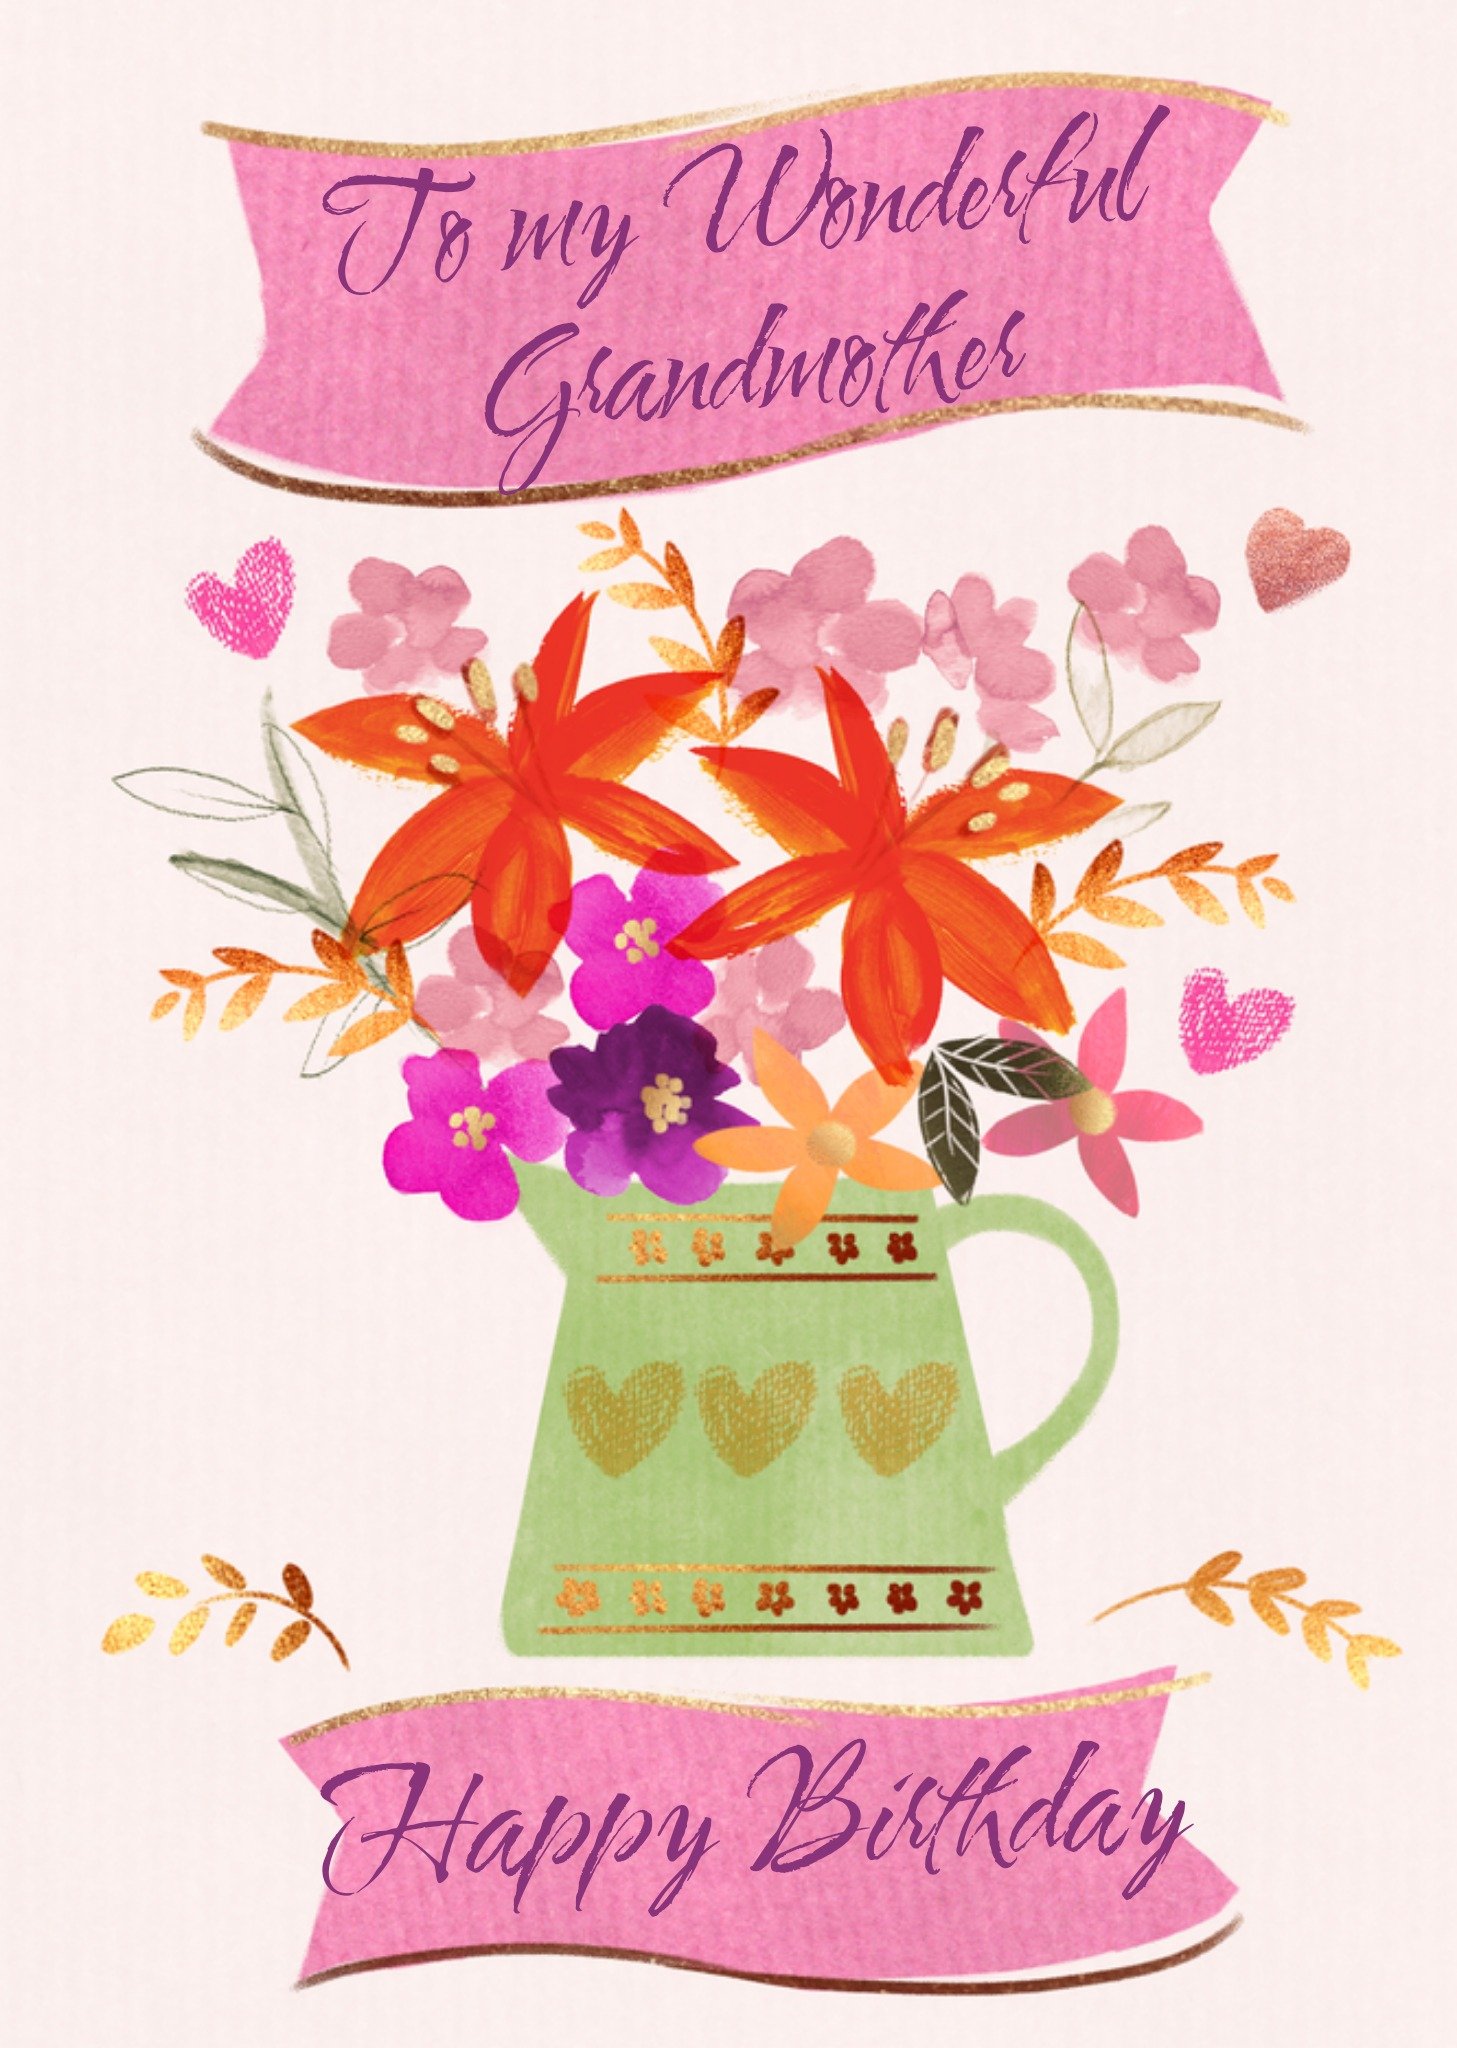 Moonpig Rustic Flowers In Jug Illustration Wonderful Grandmother Birthday Card, Large